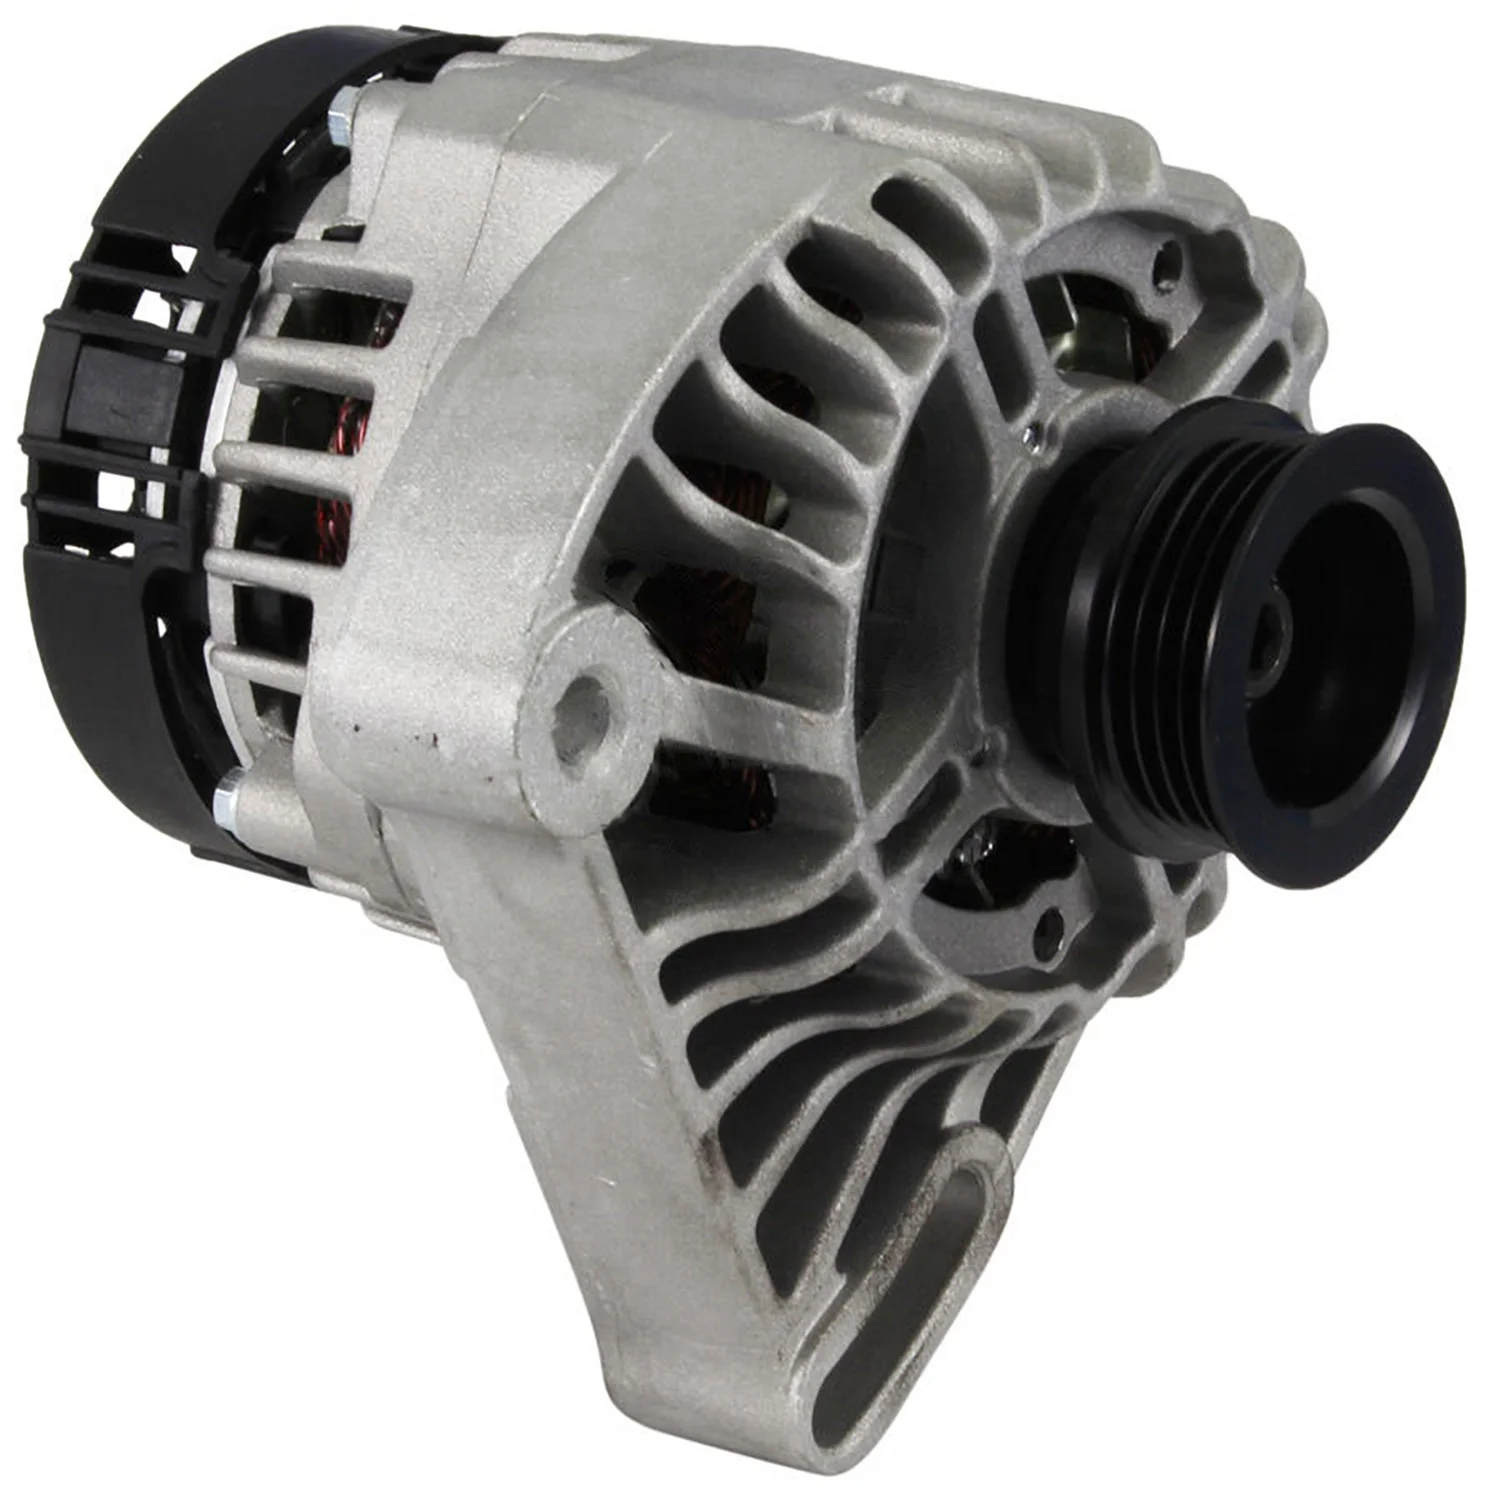 

Auto Dynamo Alternator Generator For BSH Delco DENS FIATA Ford 0986080560 114462 CAL30211AS CAL30211GS DRA0133 DAN998 51700670